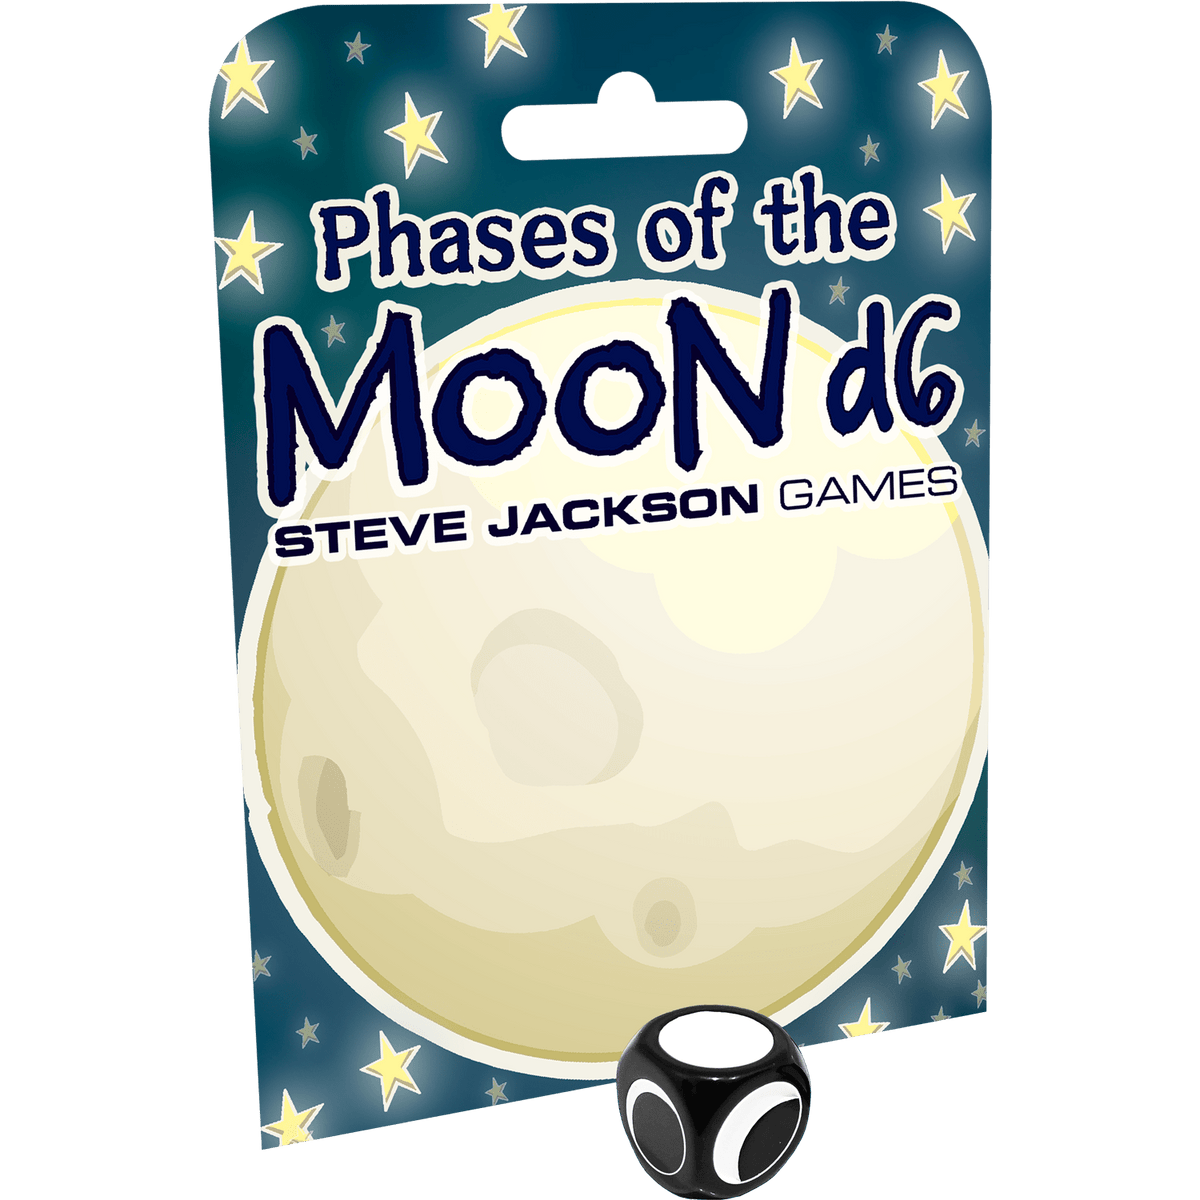 Steve Jackson: Phases of the Moon D6 - Third Eye